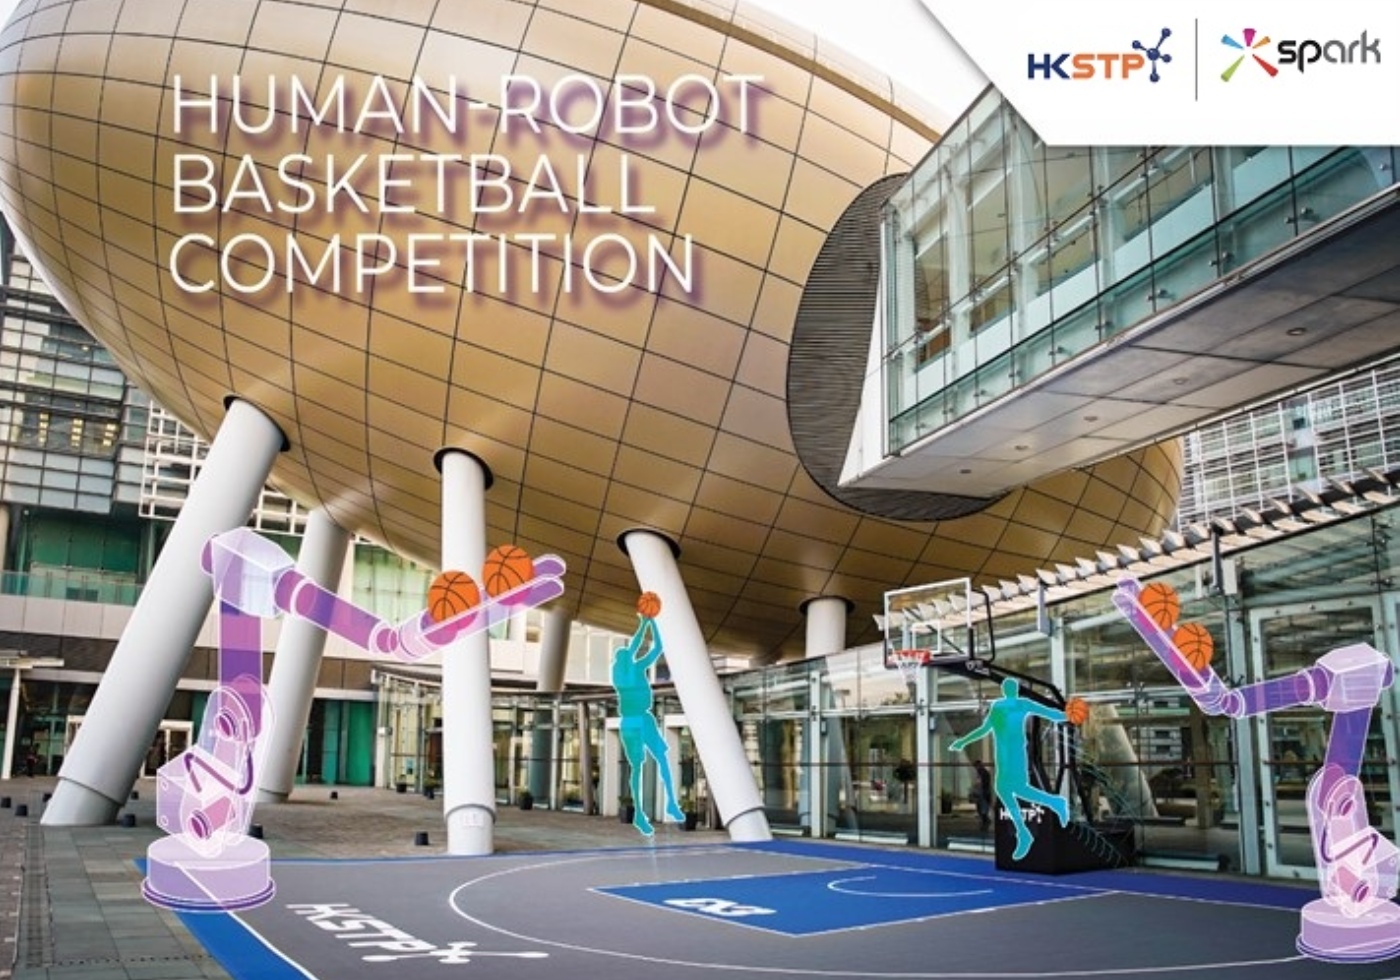 HKSTP Human-Robot Basketball Competition